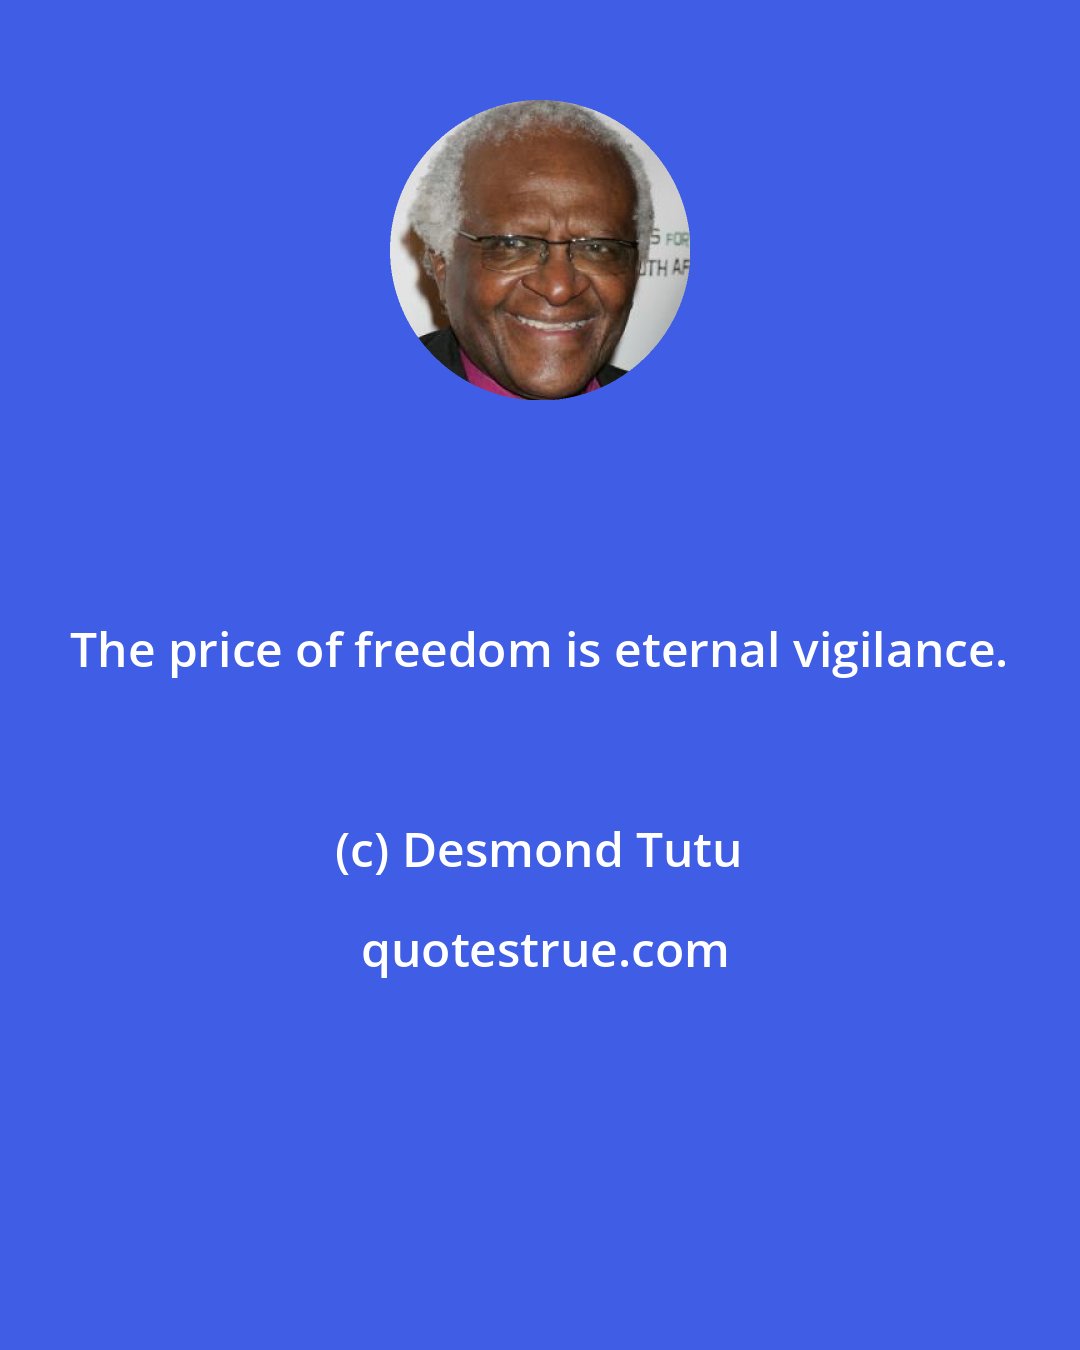 Desmond Tutu: The price of freedom is eternal vigilance.